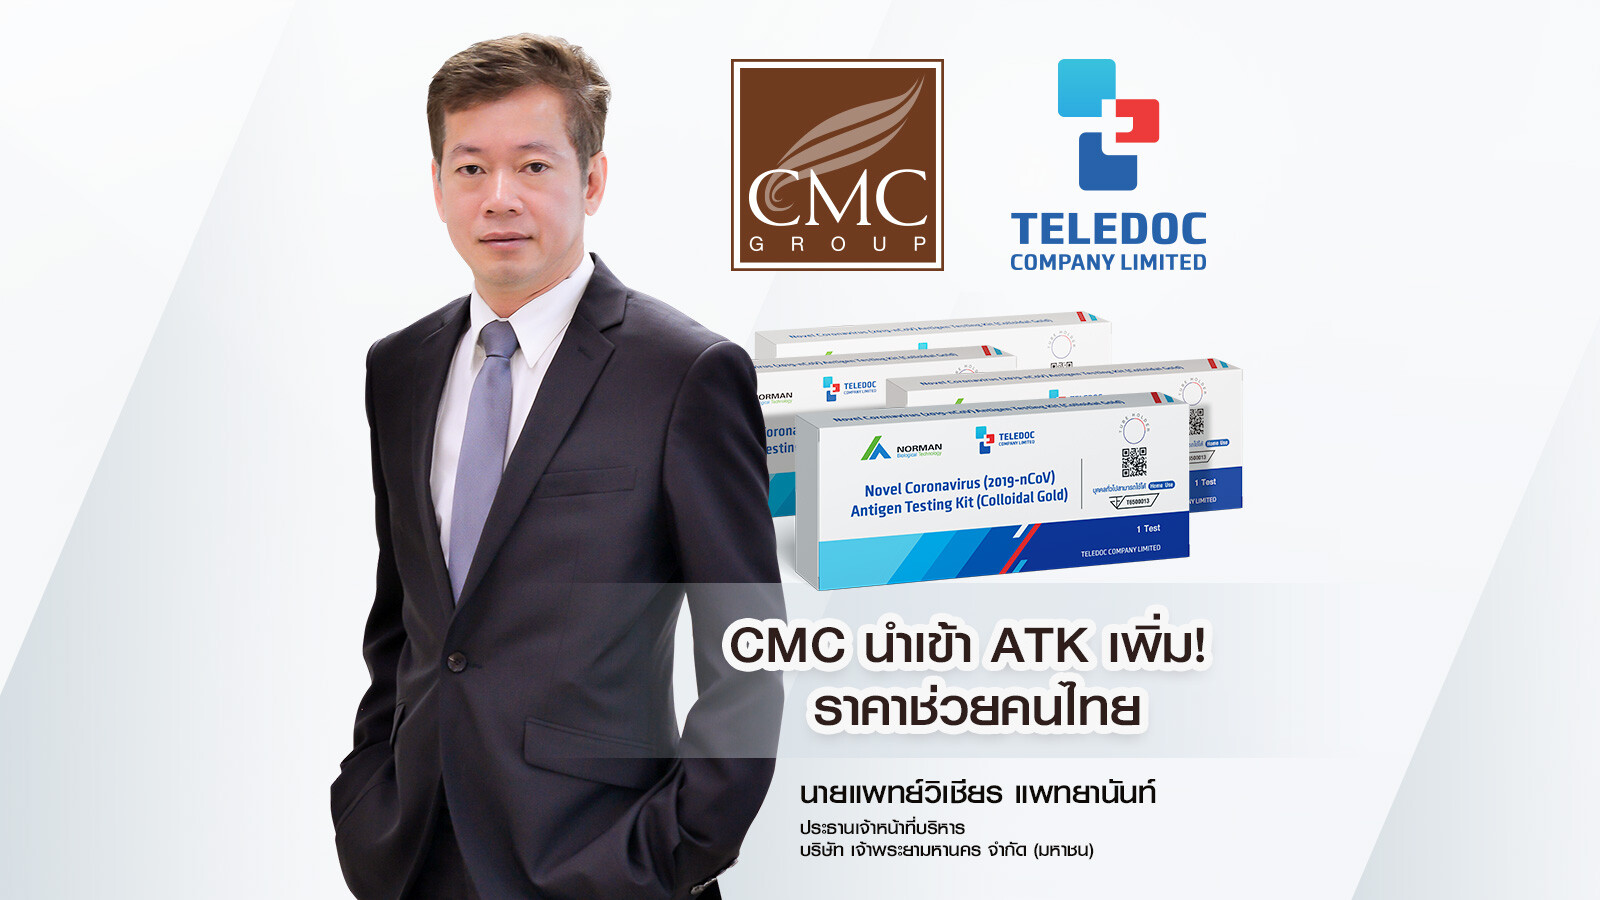 CMC นำเข้า ATK เพิ่ม! ช่วยคนไทยราคาเดิม 22 บาท ประเมินความต้องการชุดตรวจโควิด-19 แบบเร่งด่วน ยังมีต่อเนื่อง